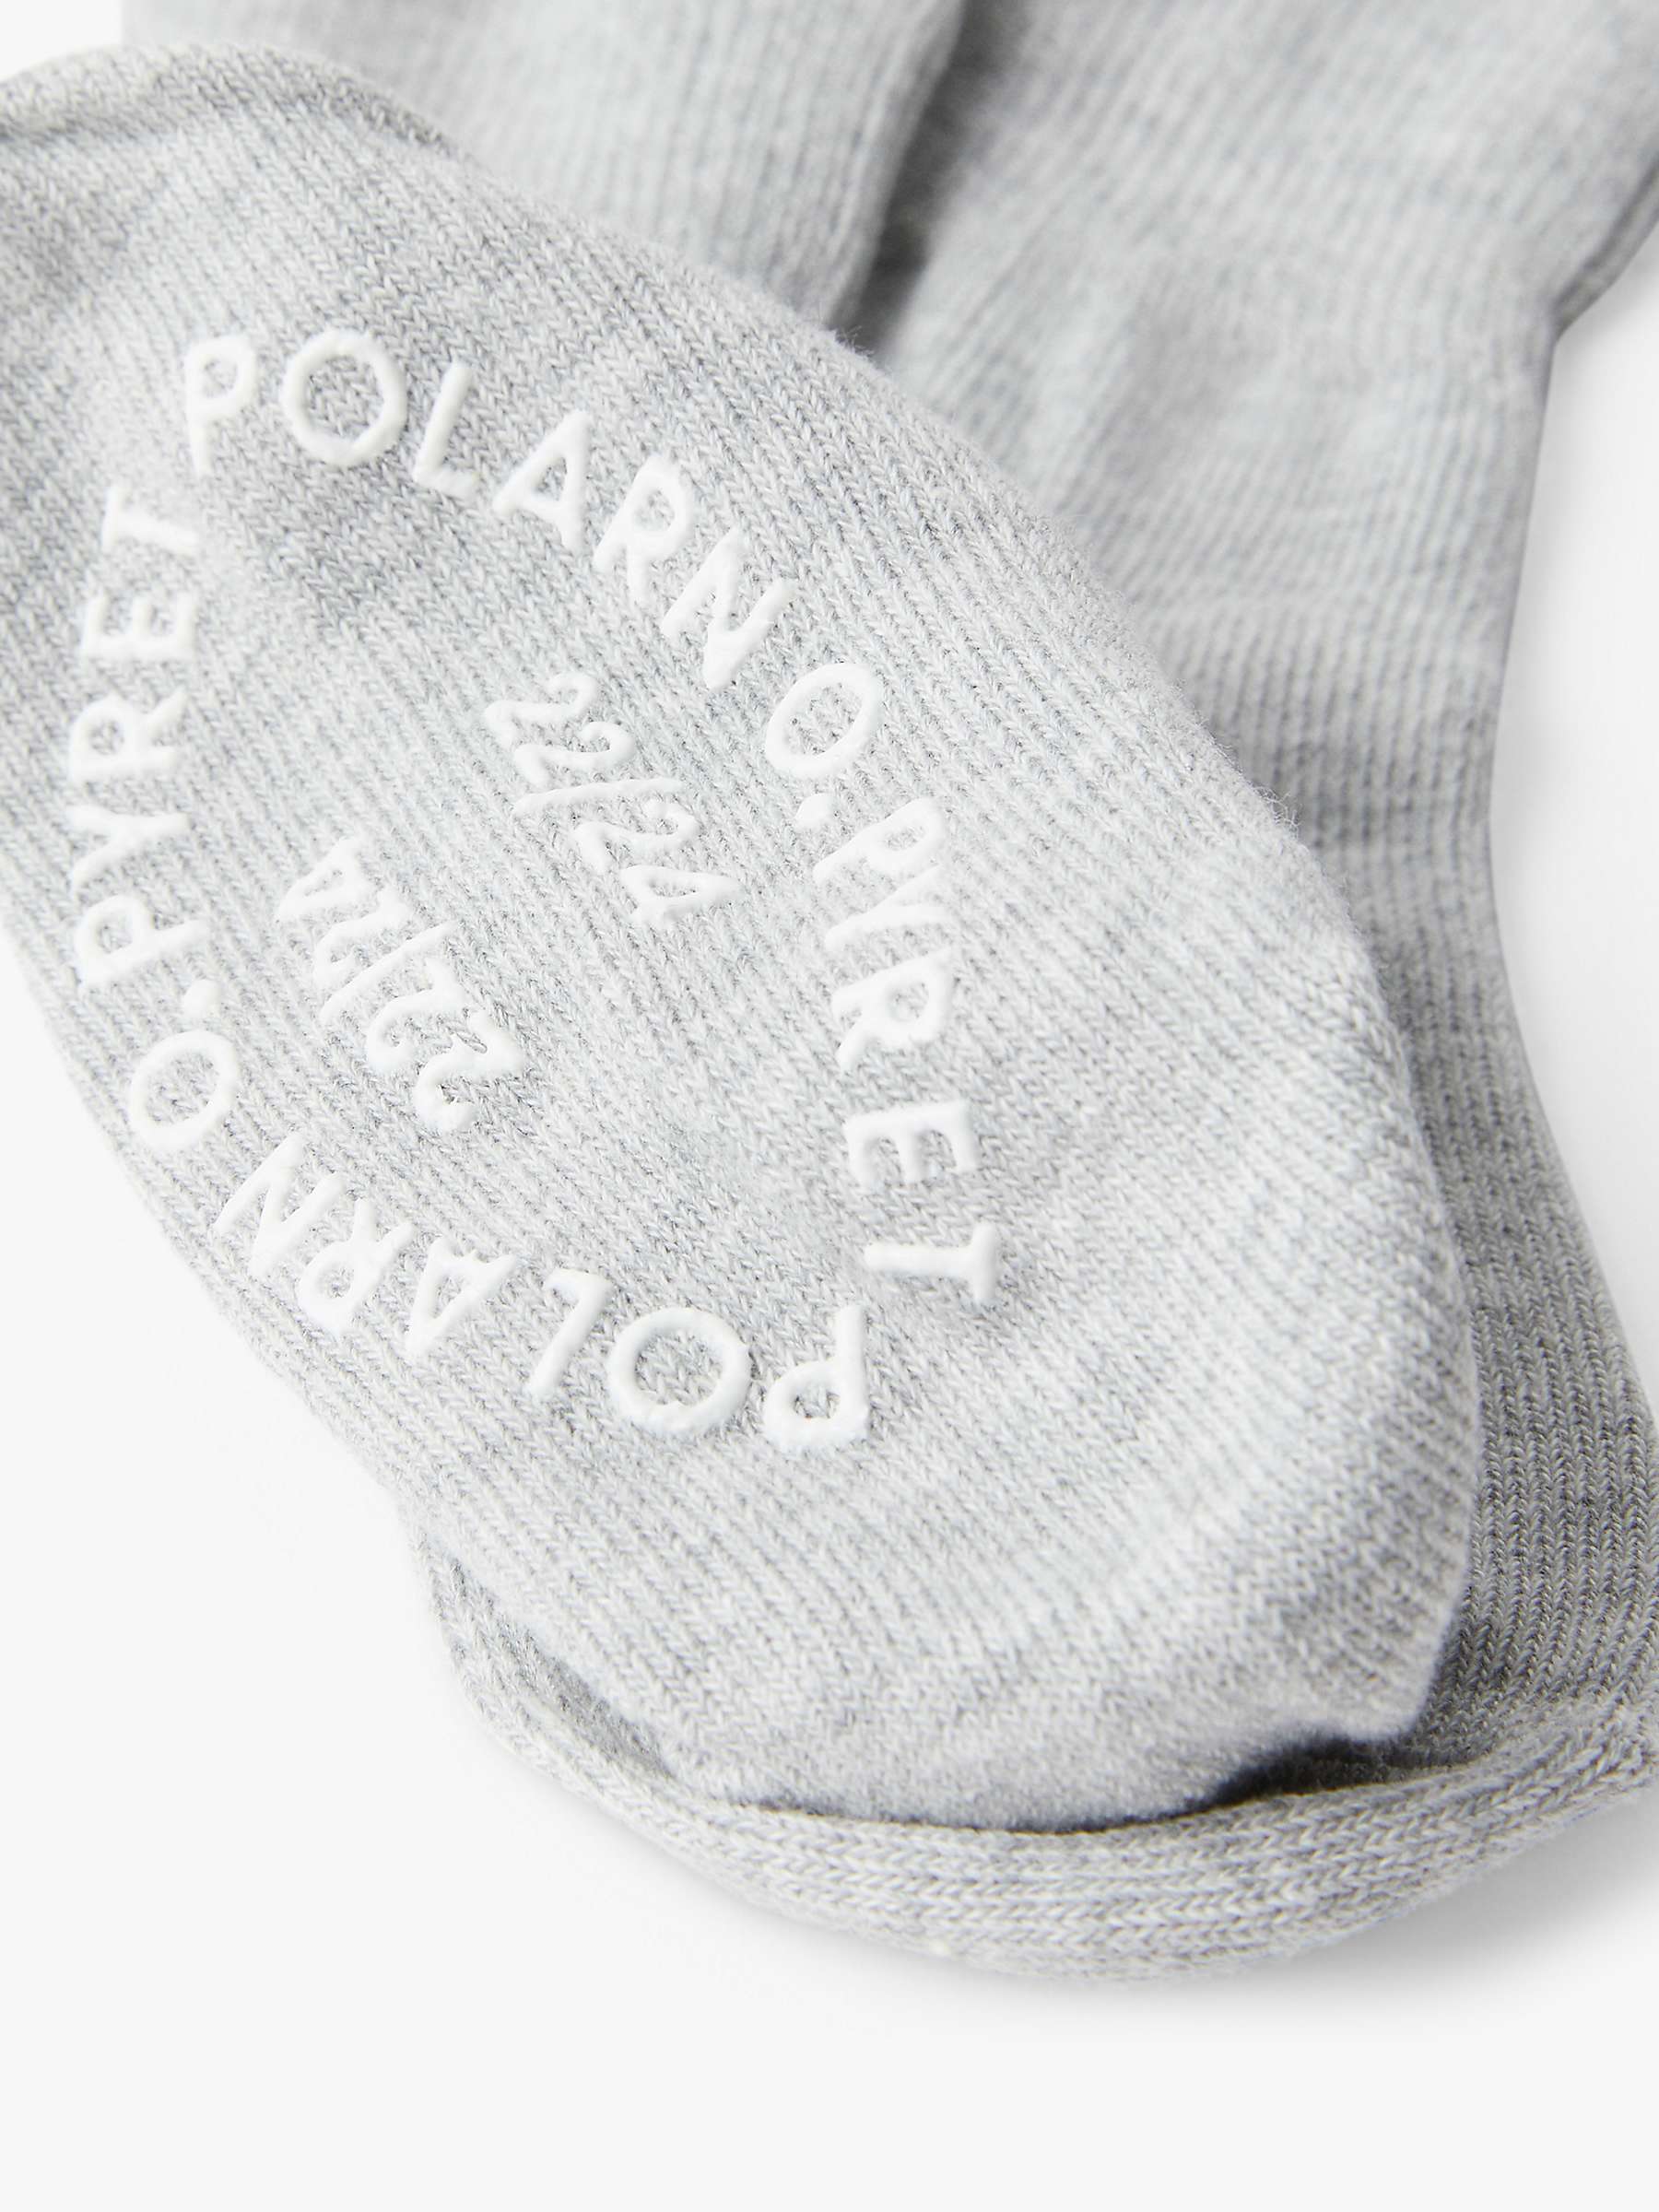 Buy Polarn O. Pyret Kids' Anti-Slip Socks, Pack of 2, Grey Online at johnlewis.com